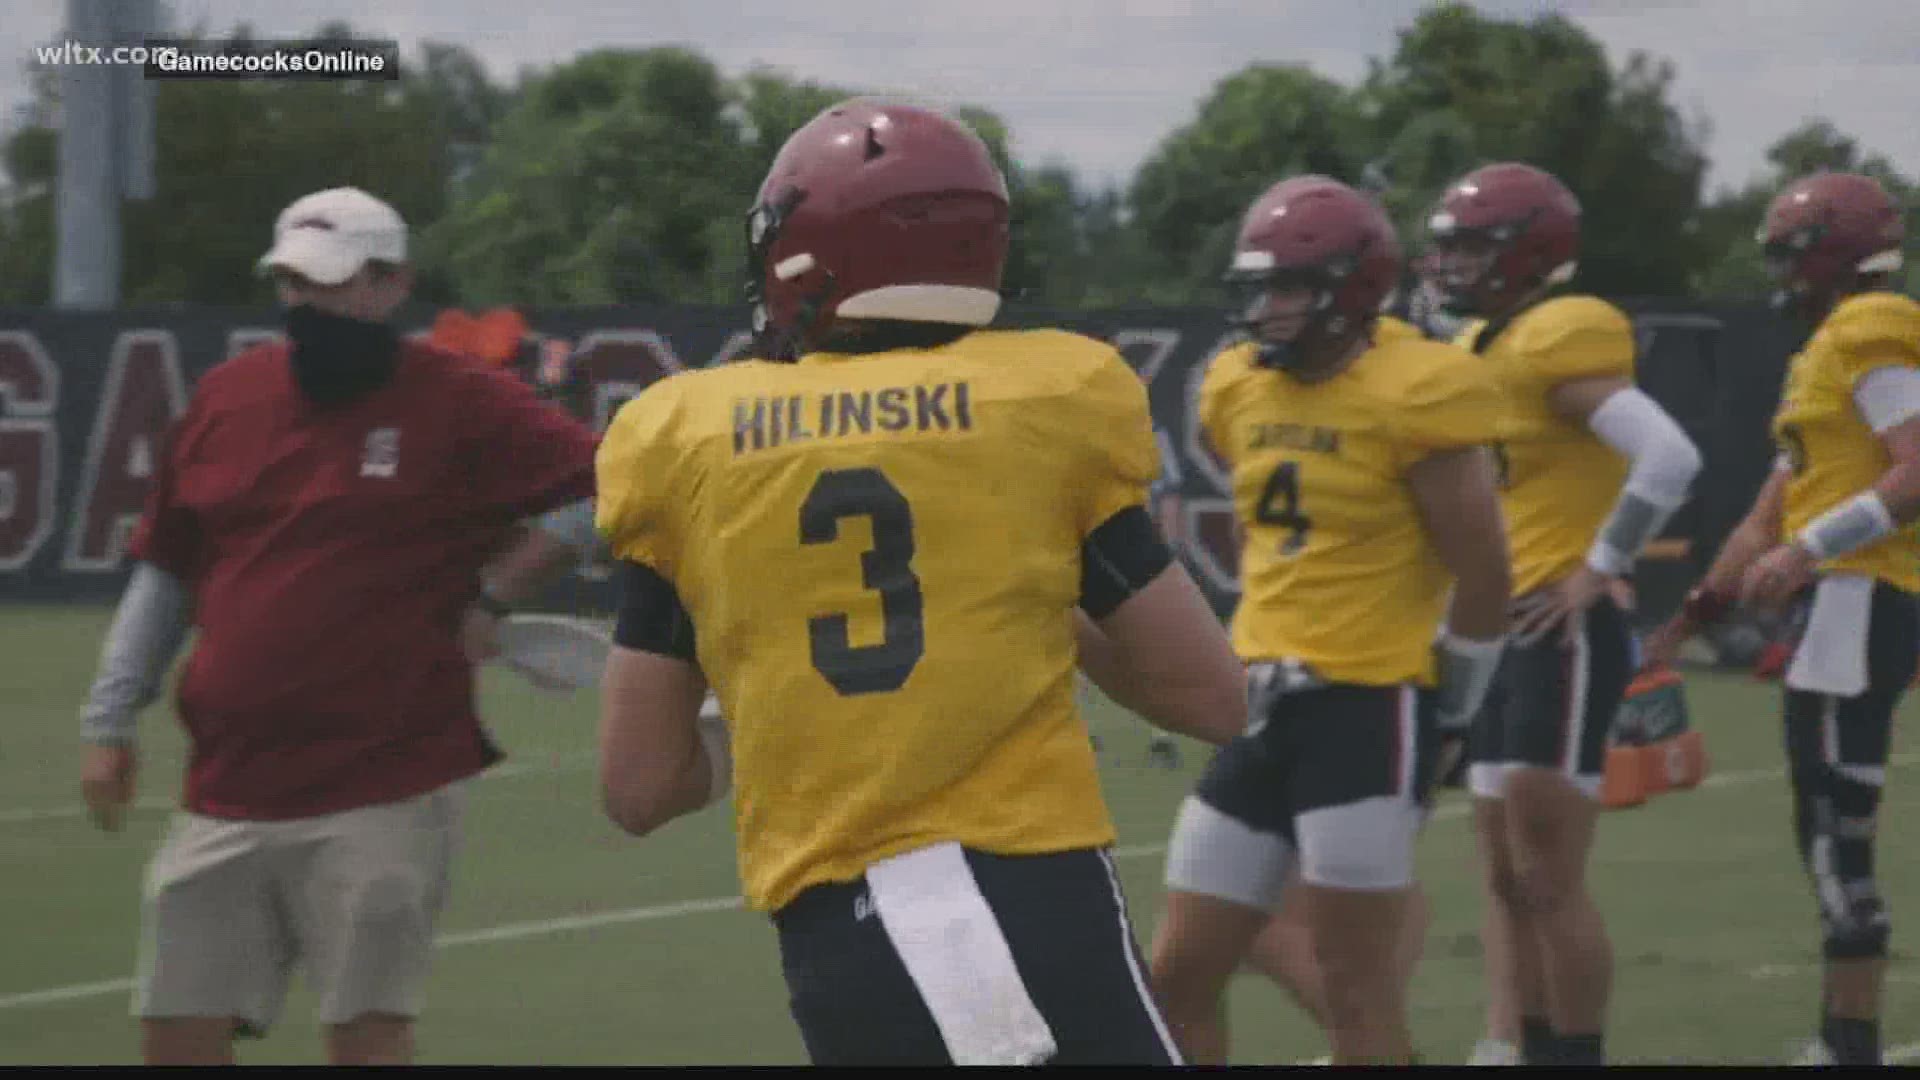 South Carolina sophomore quarterback Ryan Hilinski on how the offense wants to "bust the scoreboard."